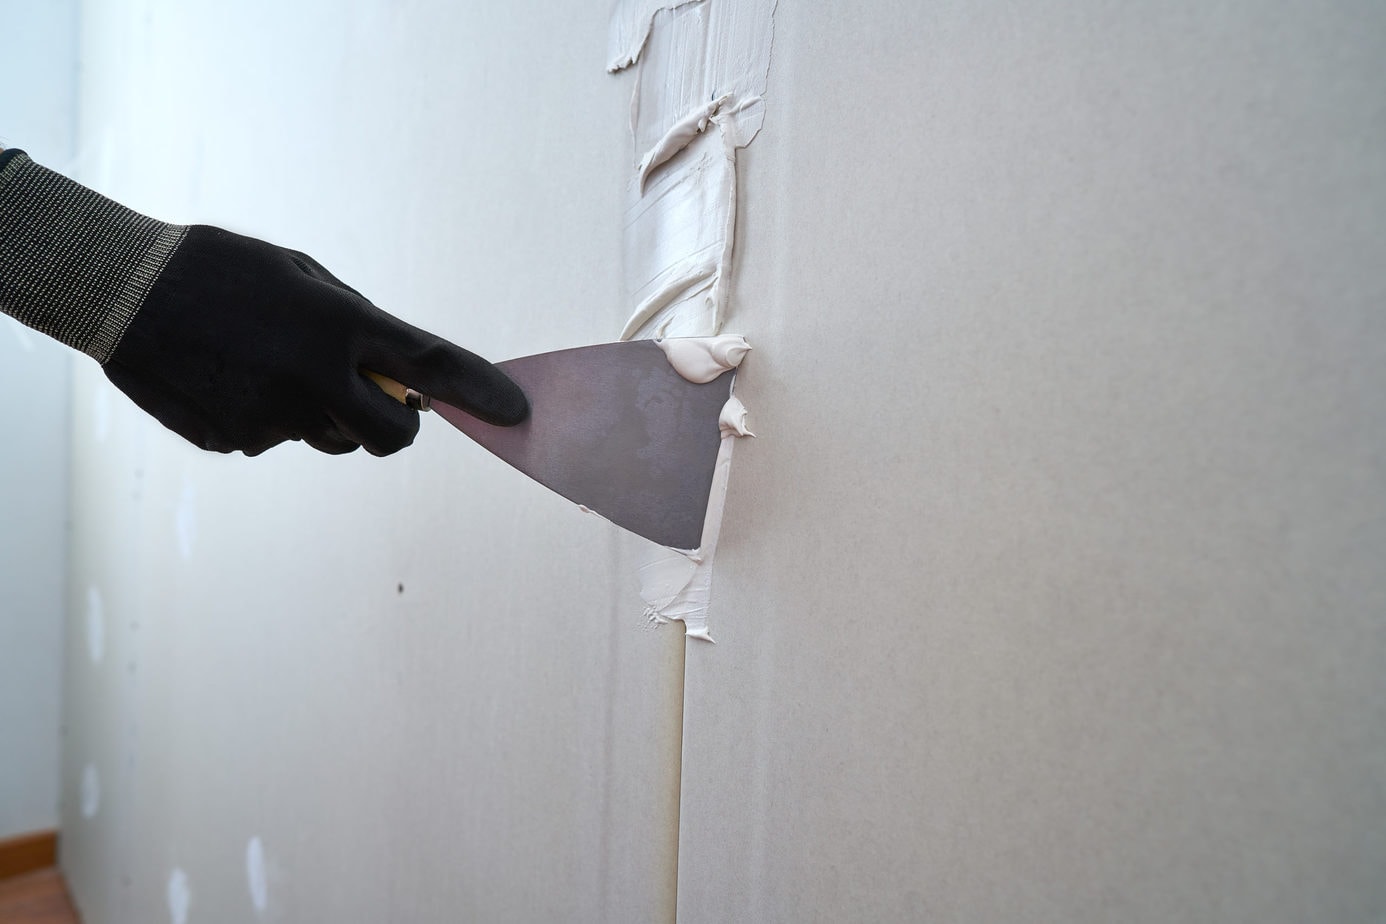 plaster wall repair using drywall